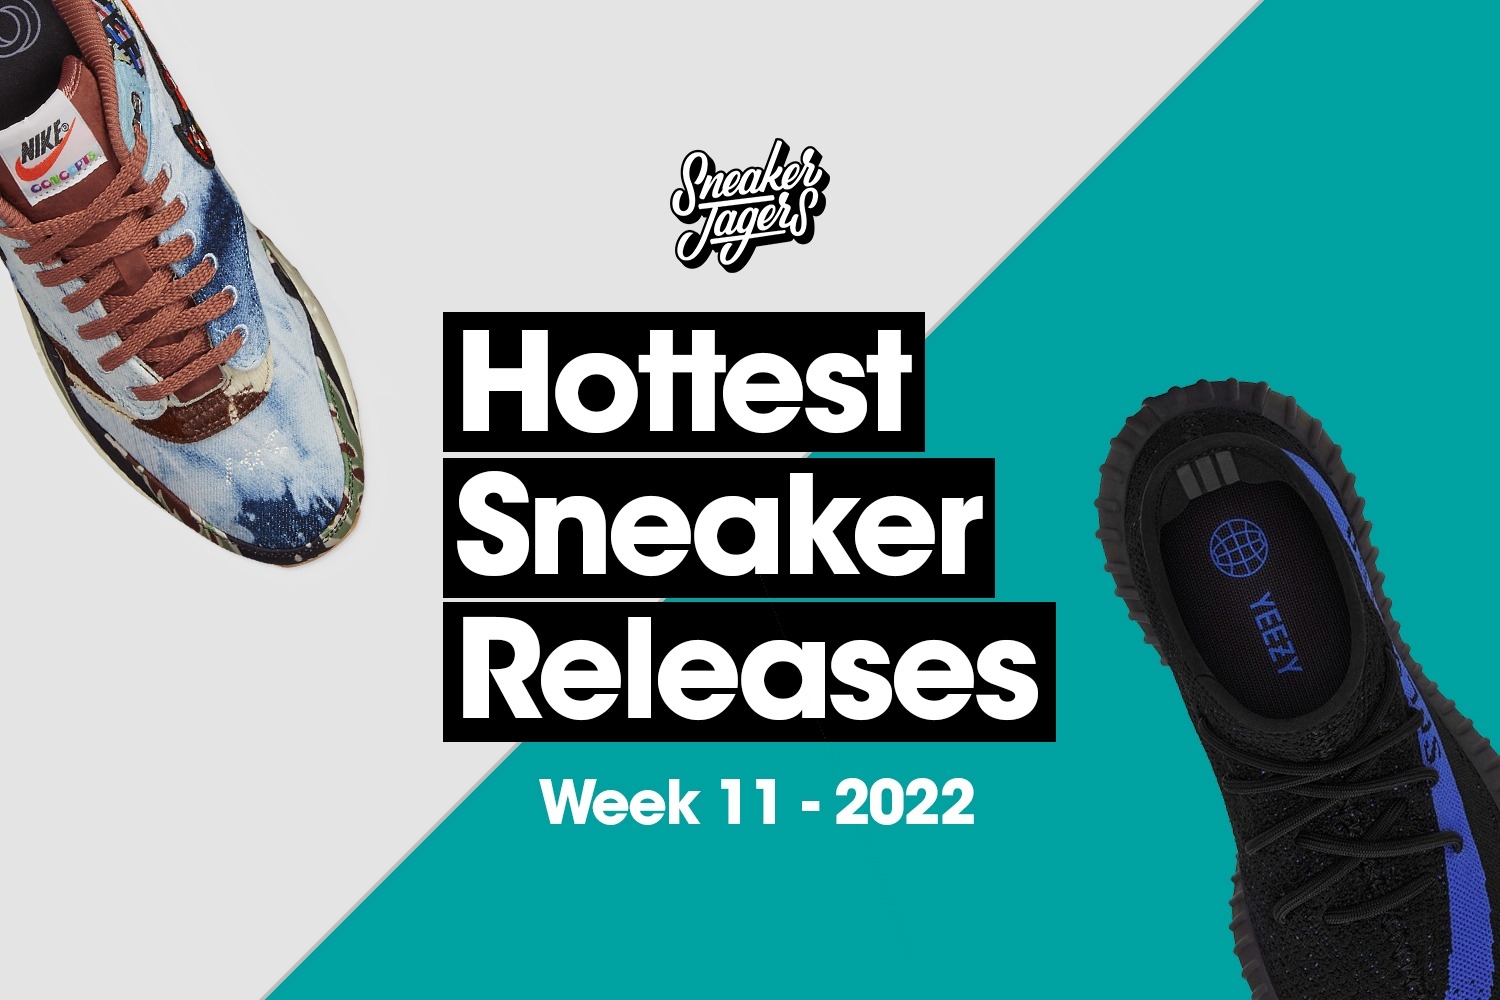 Hottest Sneaker Releases: Week 11